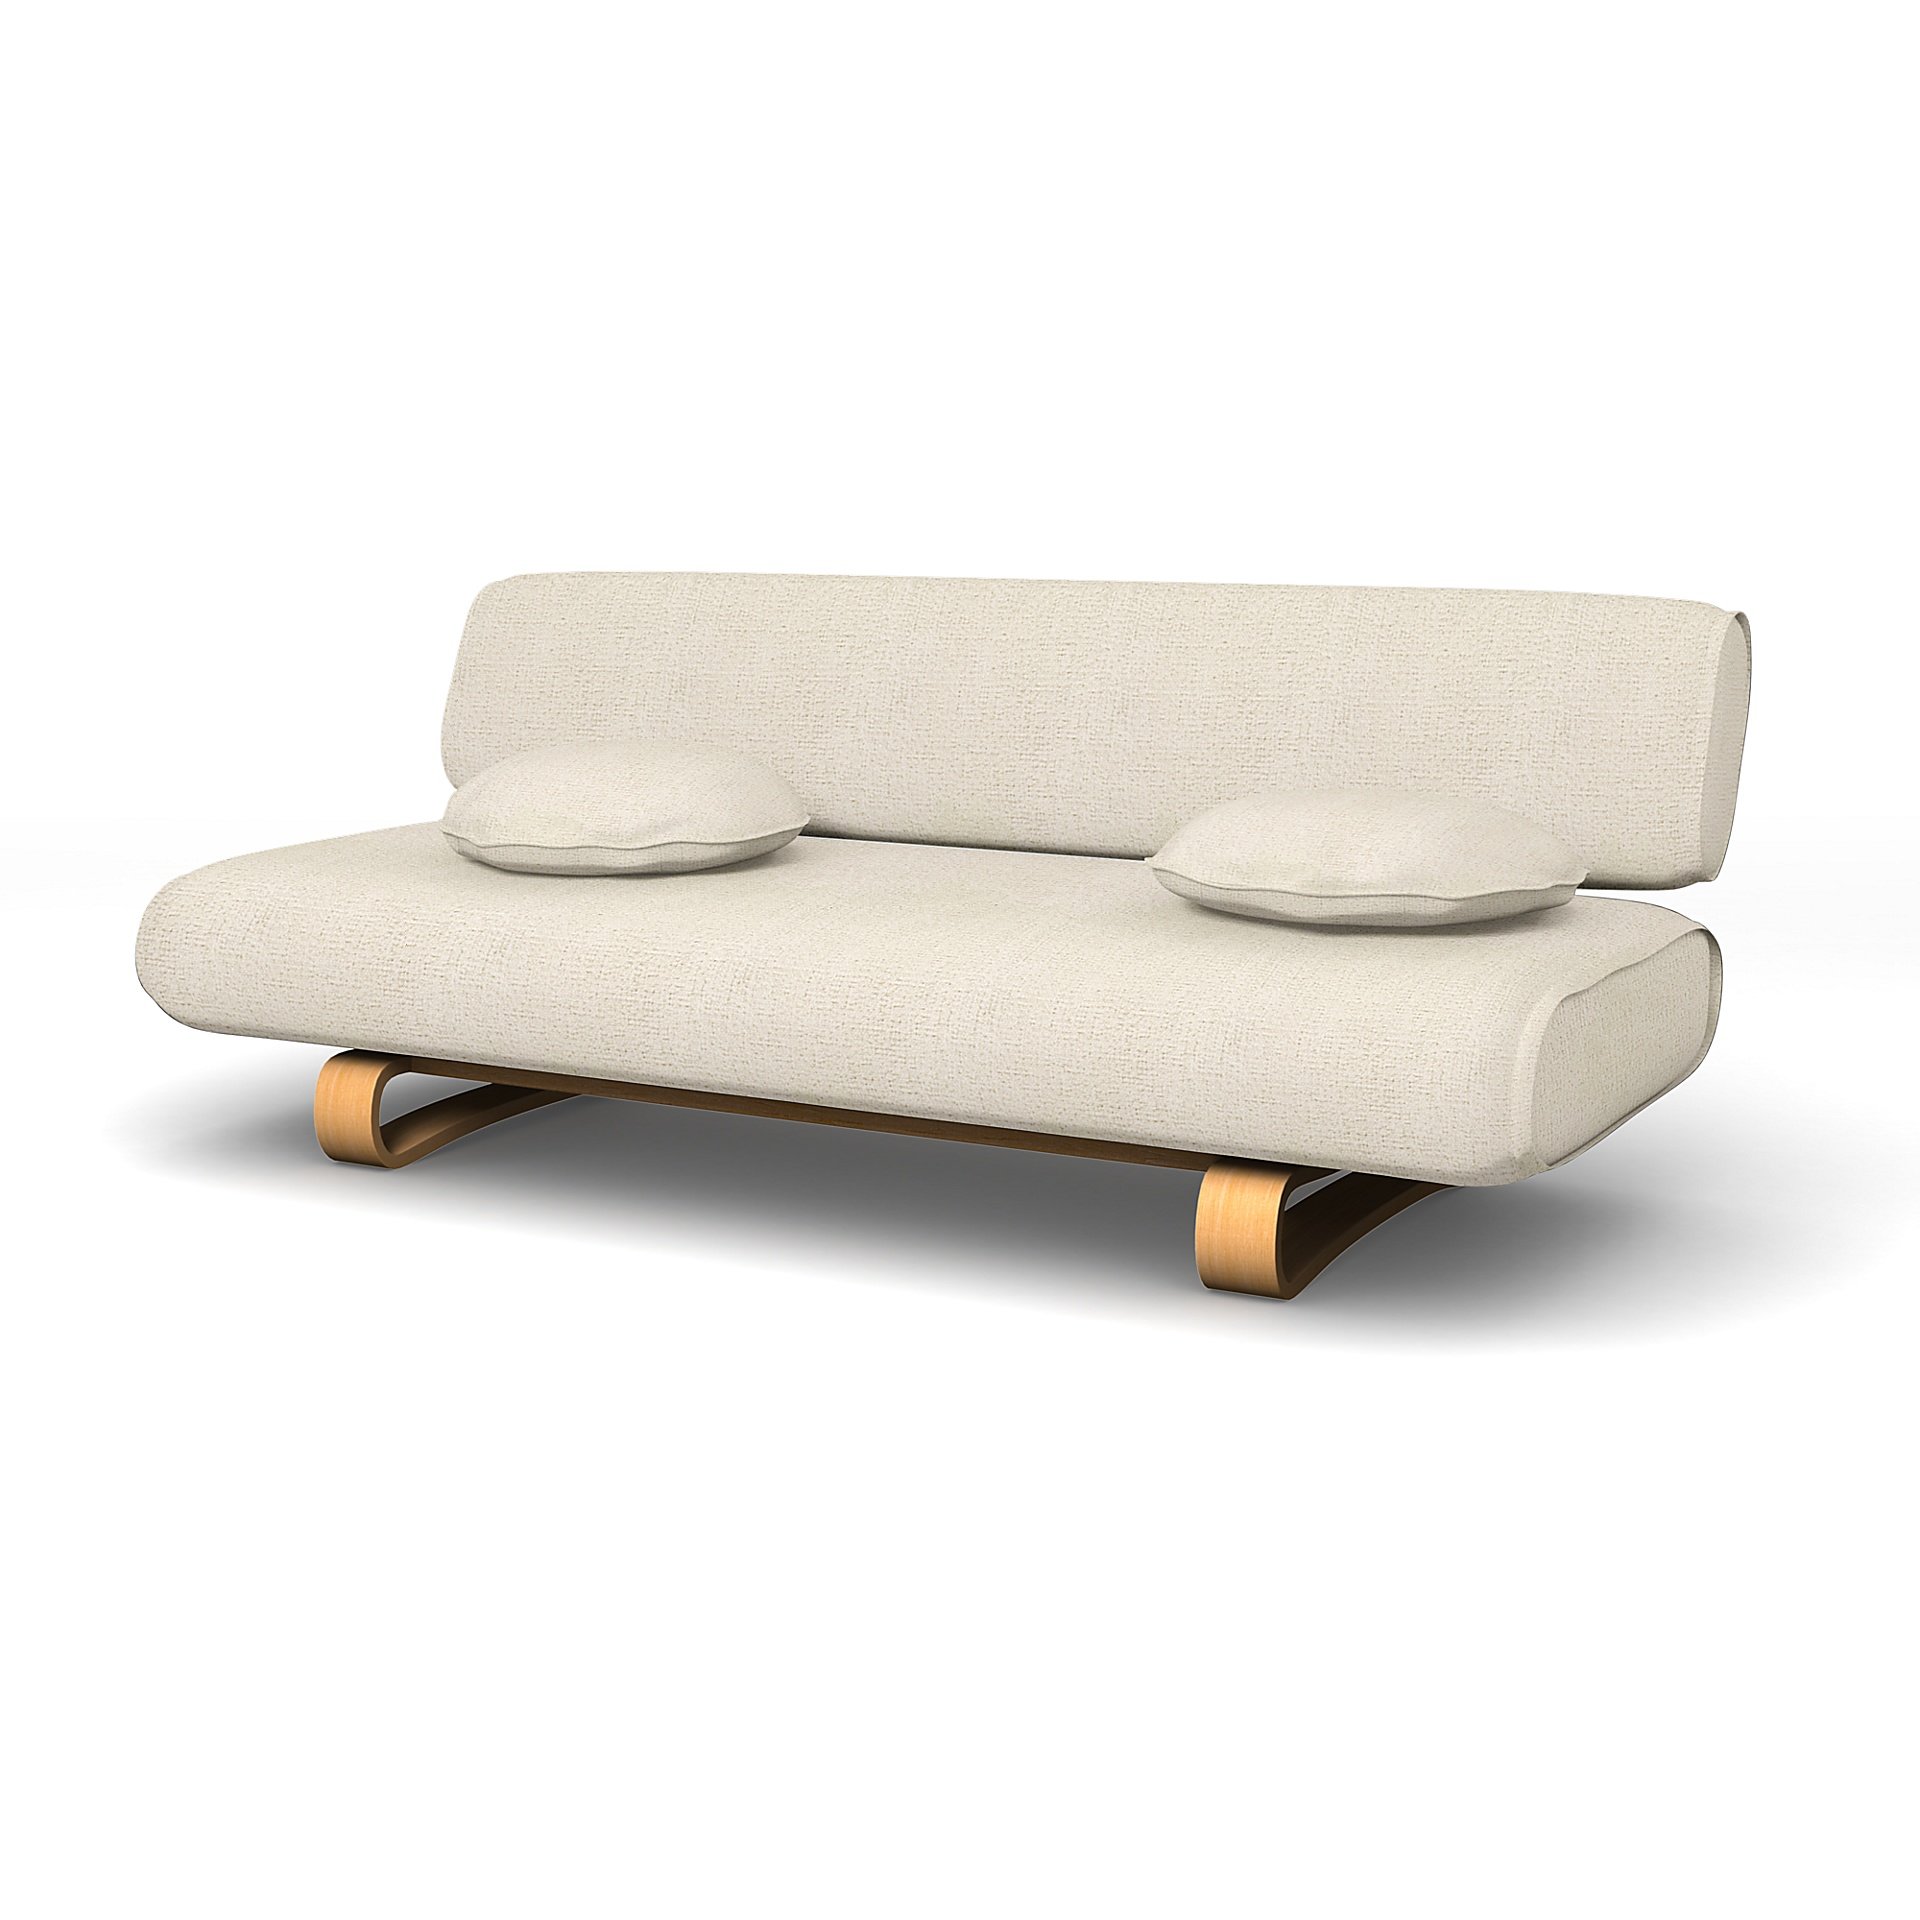 IKEA - Allerum Sofa Bed Cover, Ecru, Boucle & Texture - Bemz